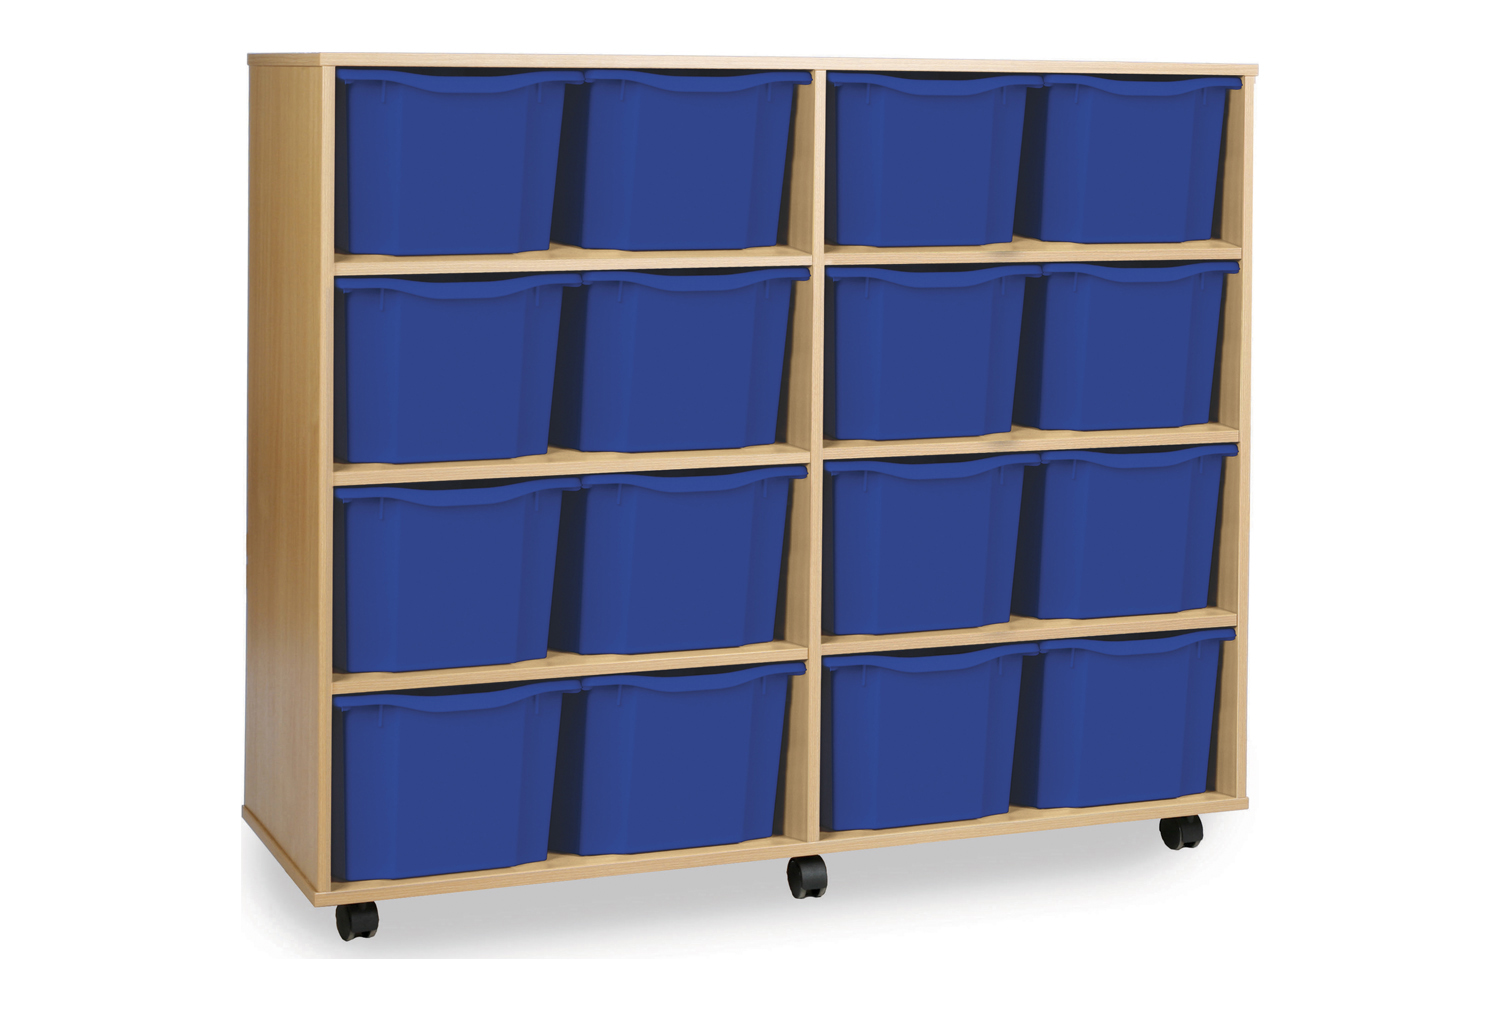 16 Extra Deep Classroom Tray Storage Unit, Red/Blue/Green/Yellow Classroom Trays